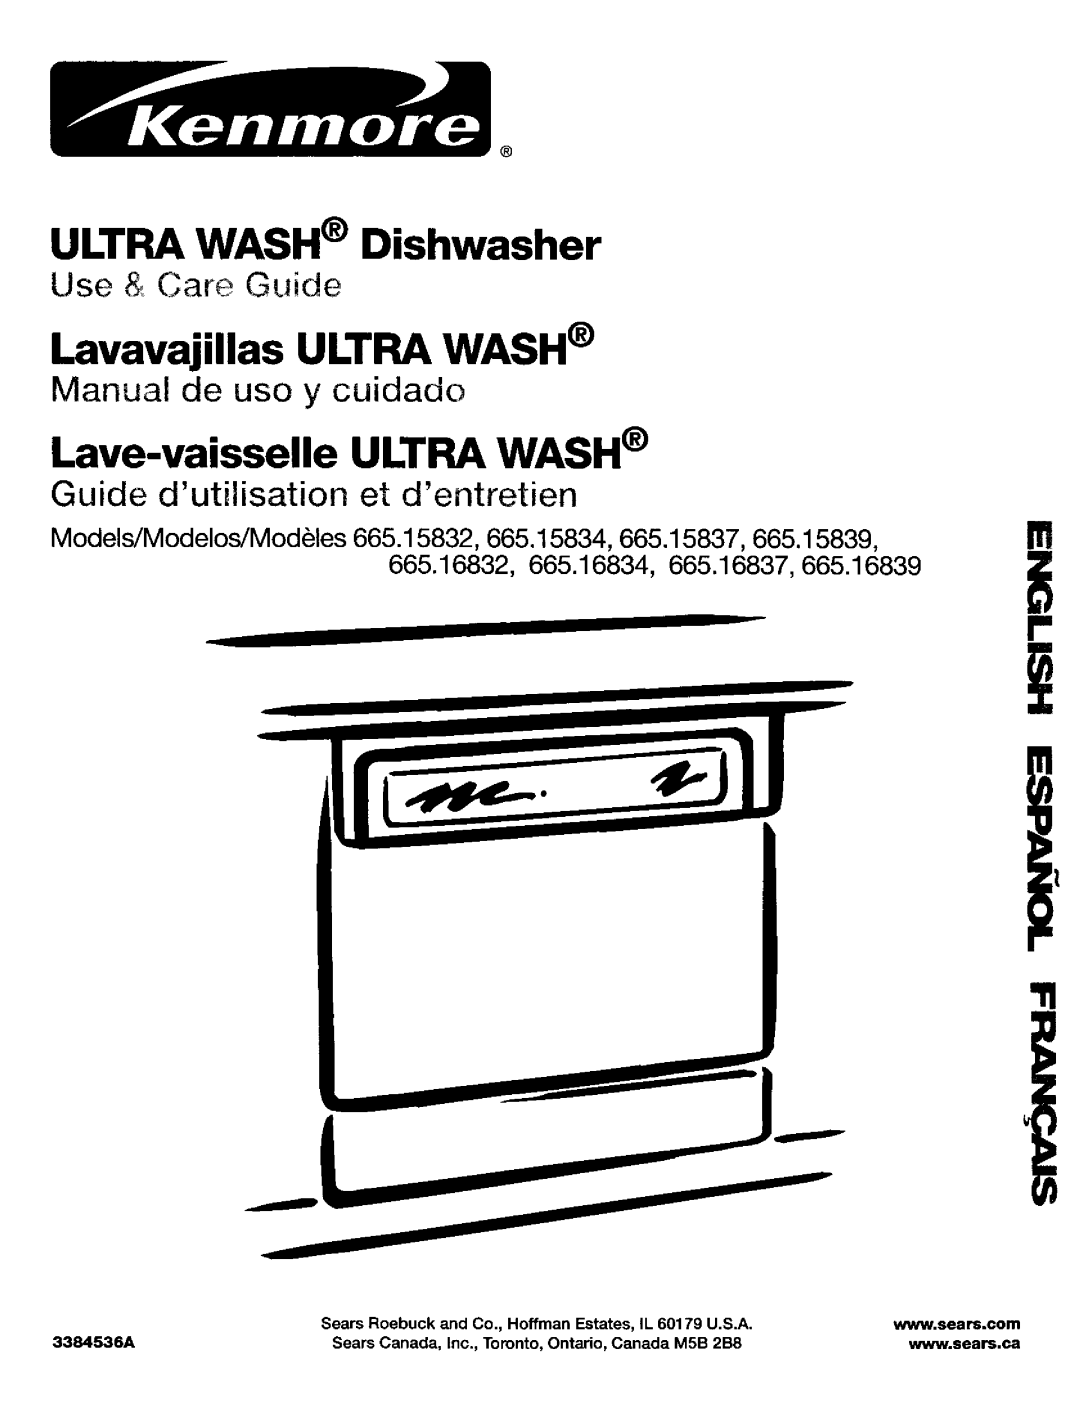 Kenmore 665.15839 manual ULTRA WASH Dishwasher, Lavavajillas ULTRA WASH, Lave-vaisselleULTRA WASH, Use & Care Guide 